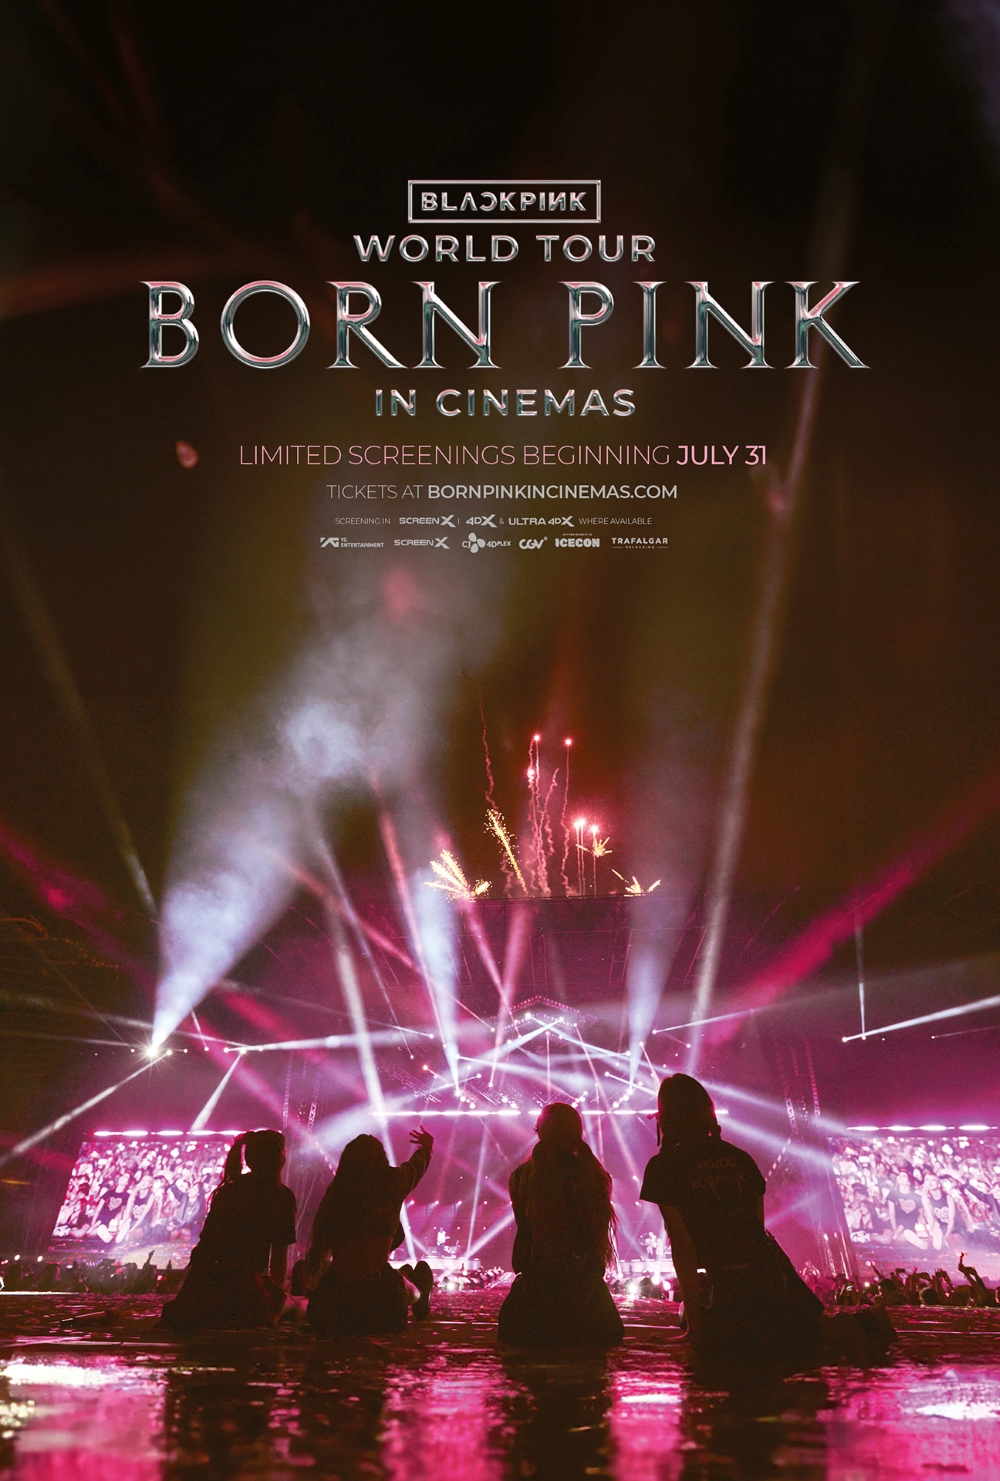 BLACKPINK-WORLD-TOUR-BORN-PINK-IN-CINEMAS